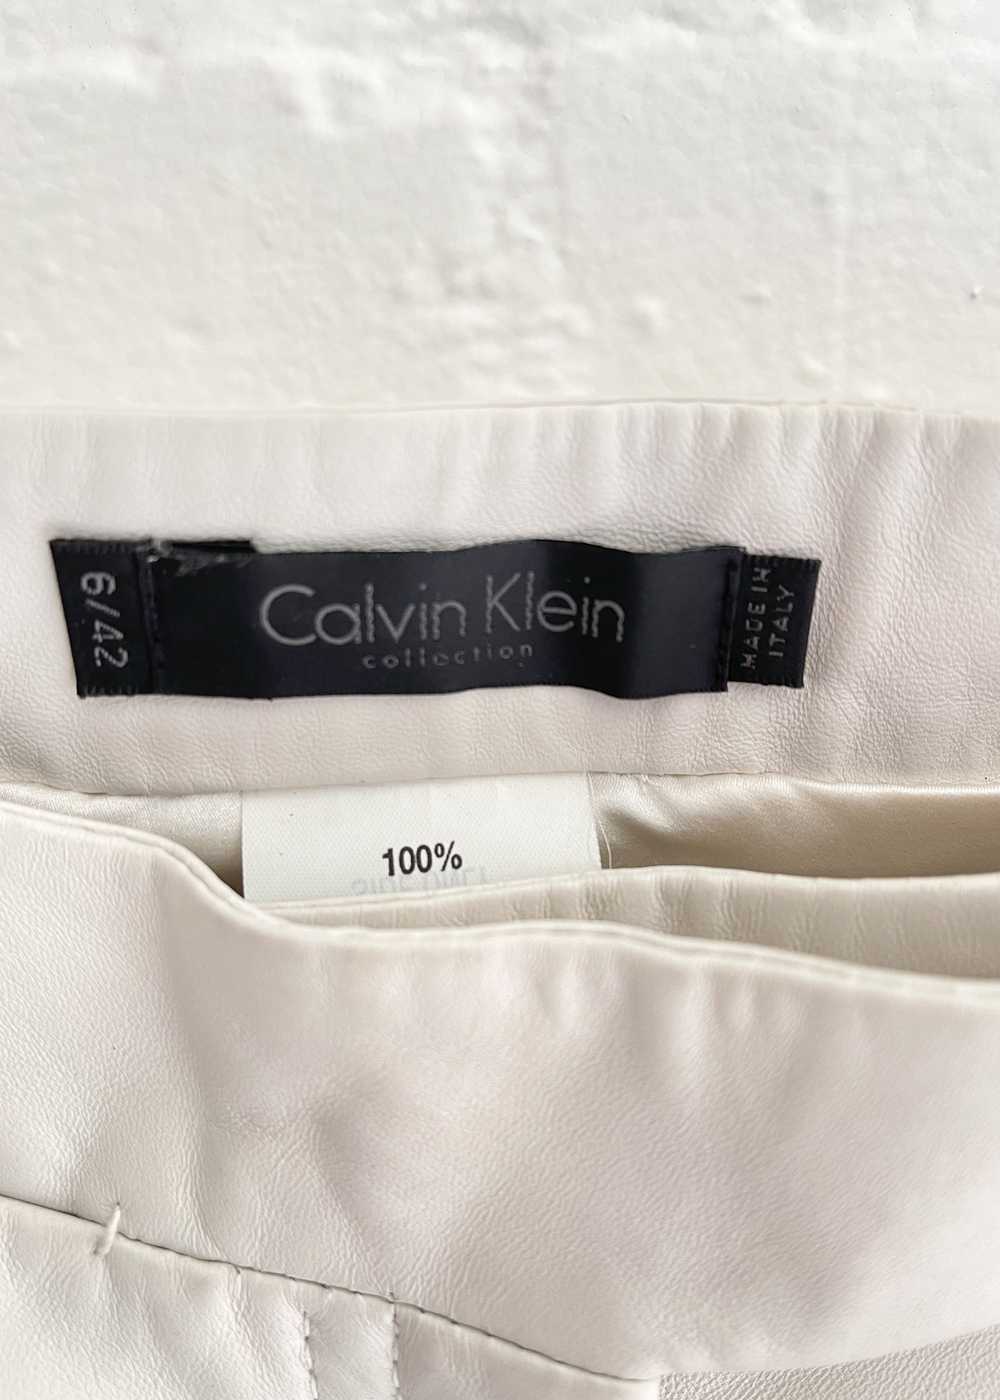 Vintage Calvin Klein Leather Shorts - image 4